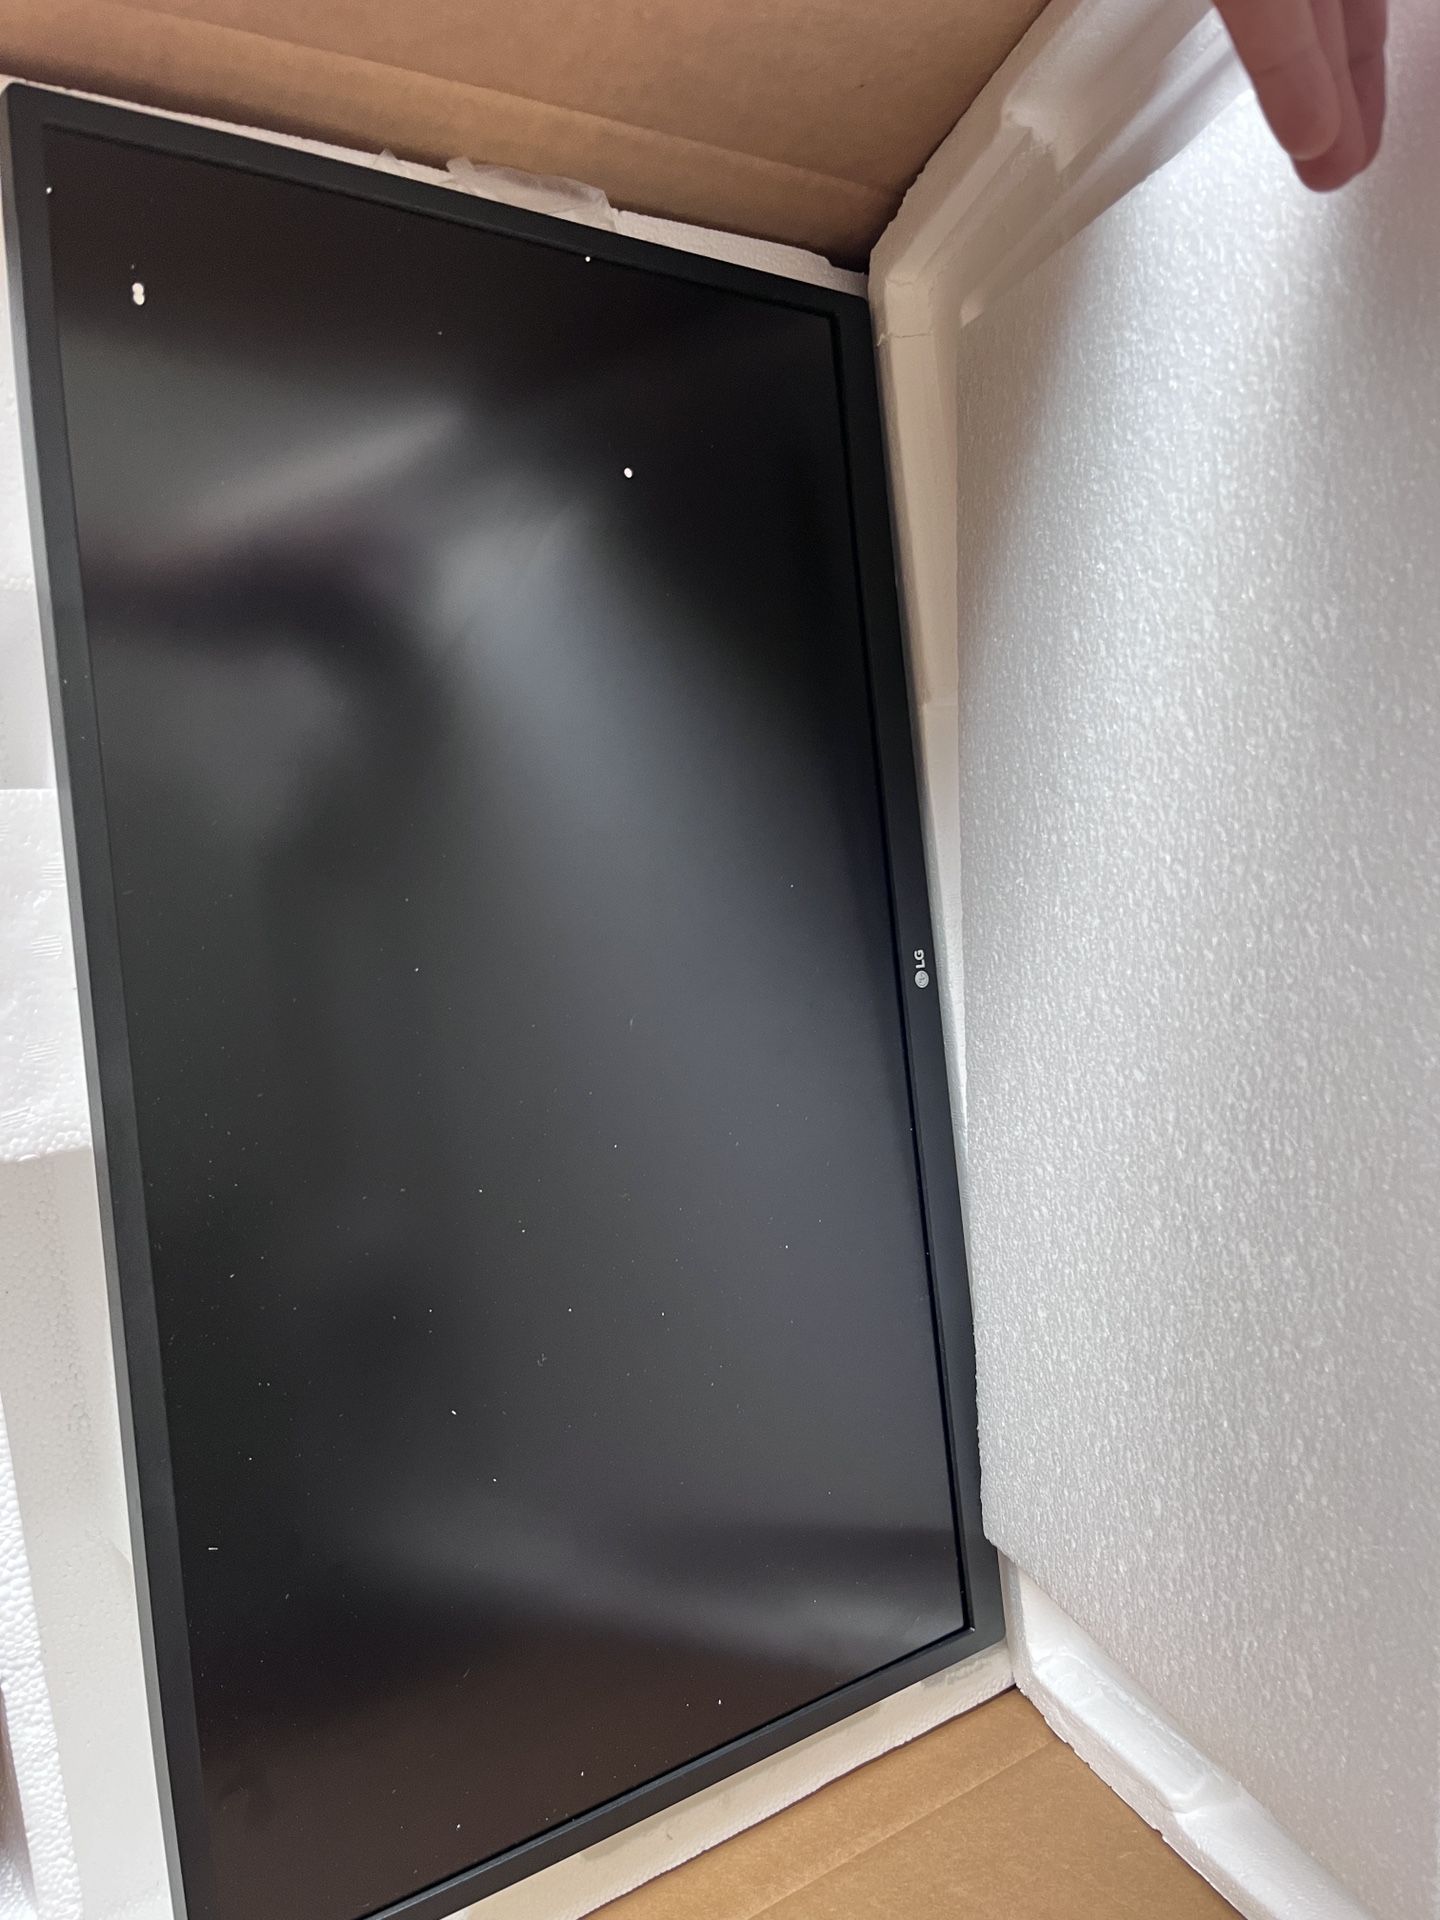 LG 27” UHD 4k Monitor